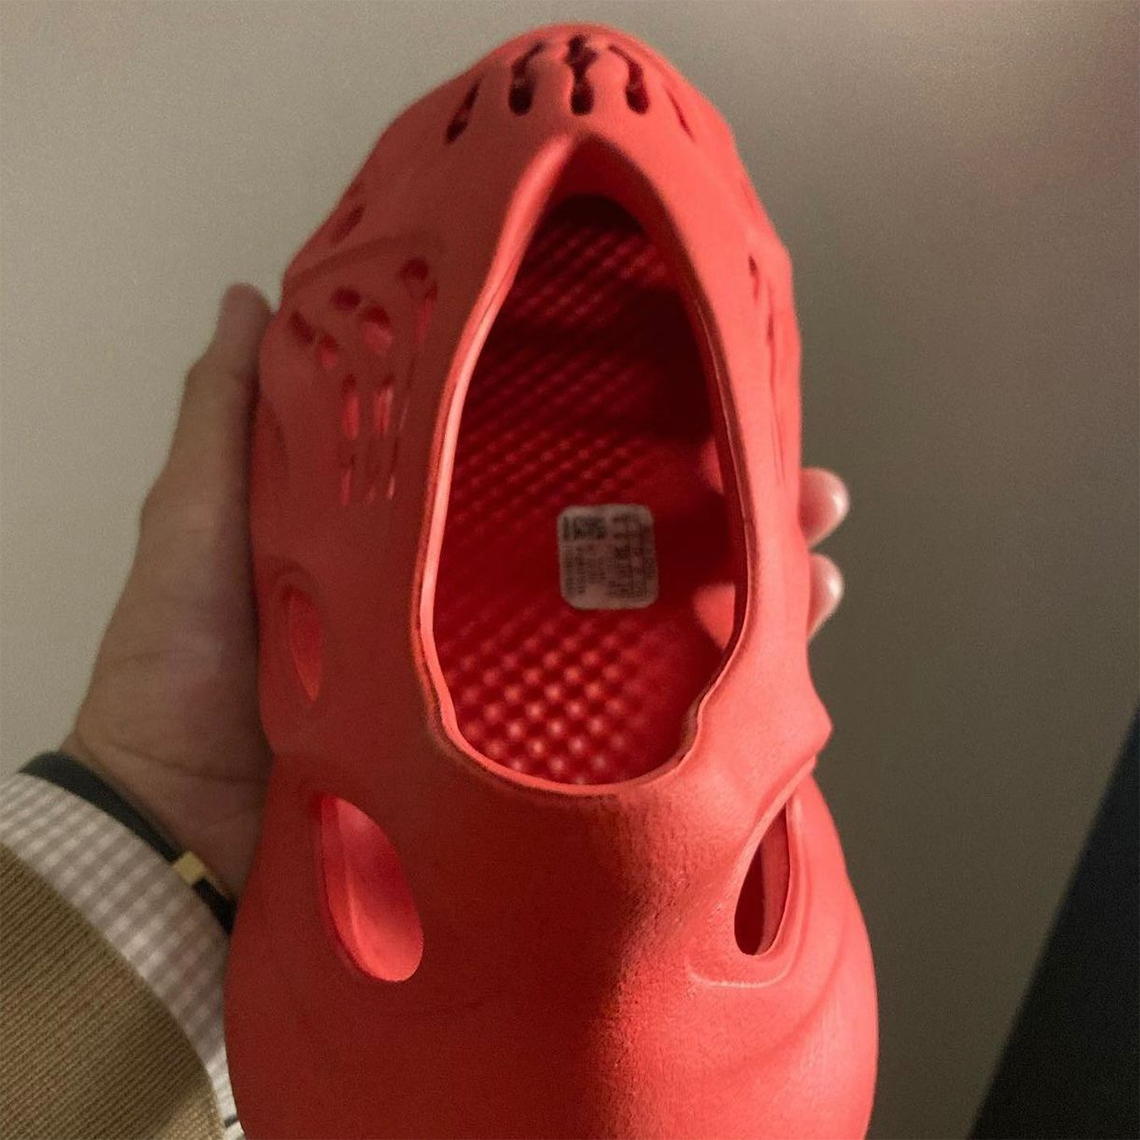 adidas Yeezy Foam Runner Vermillion Release Date | SneakerNews.com